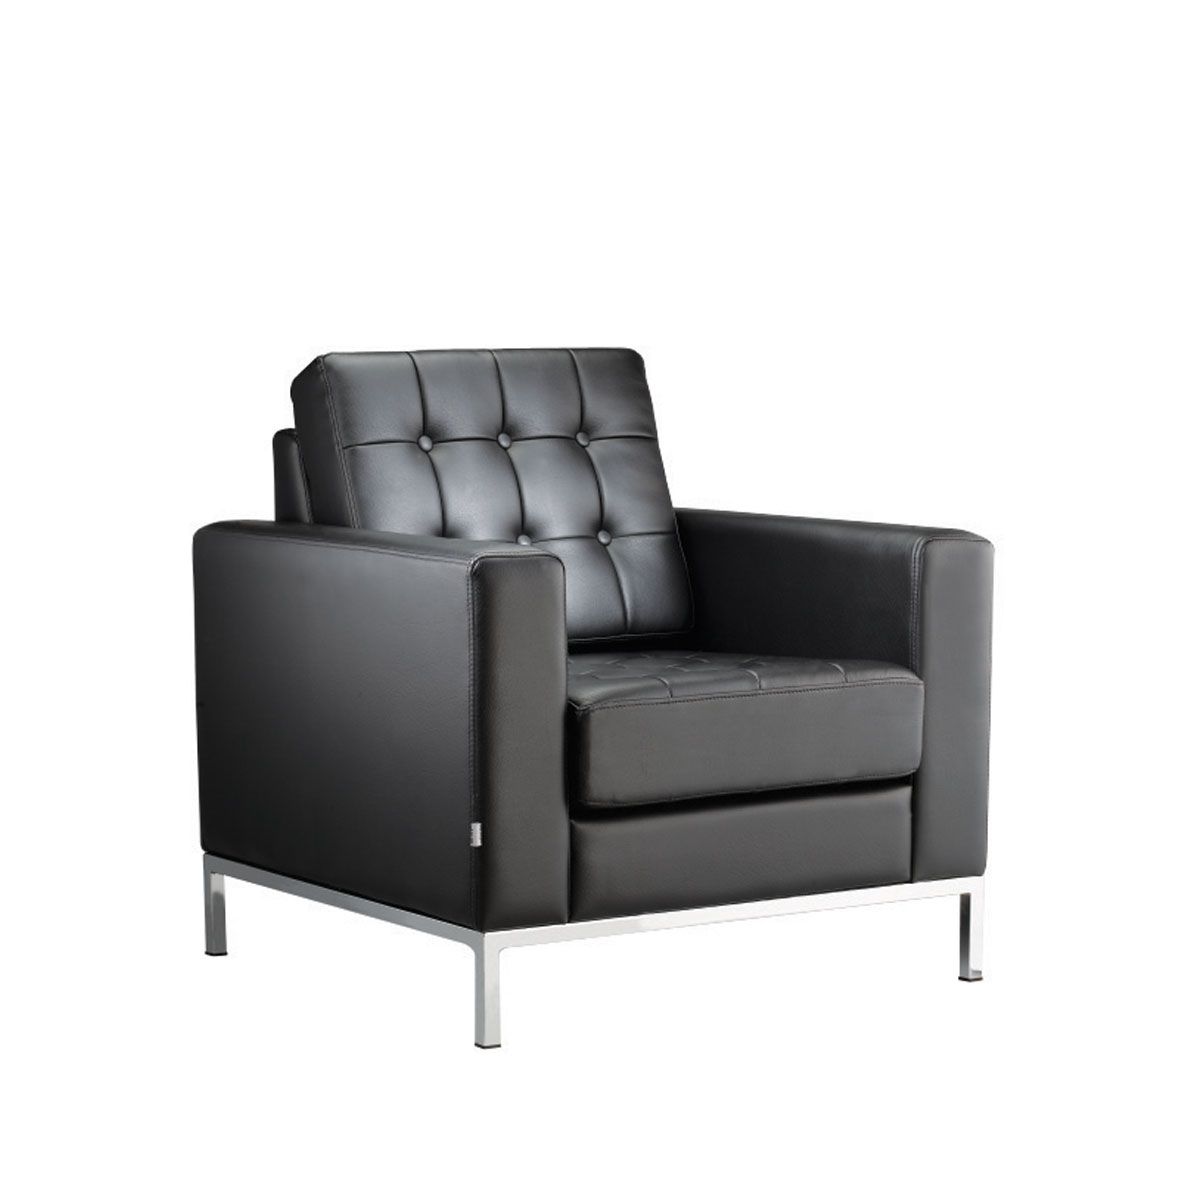 Single Seater Sofa / Allium 1 Within Single Seat Sofa Chairs (View 14 of 15)